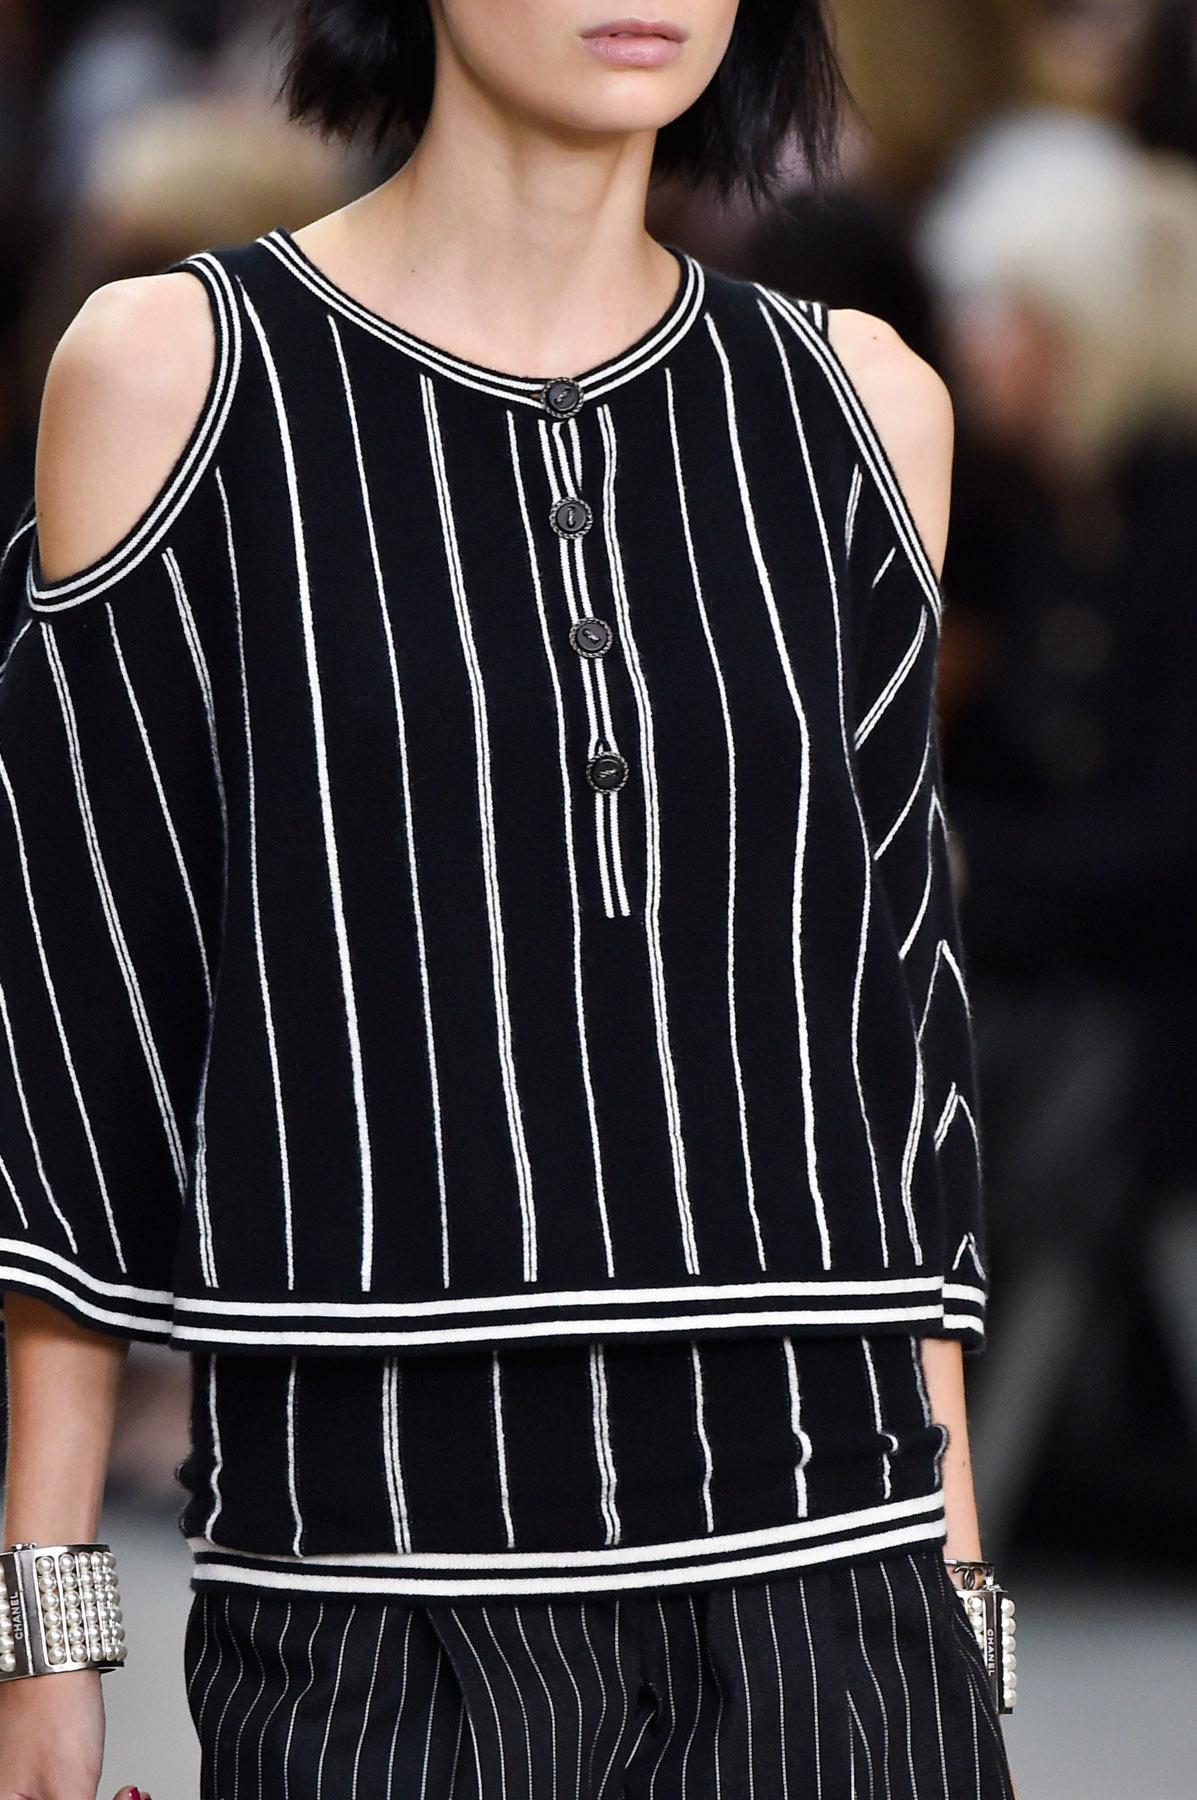 Chanel-detalhes-verao2015-paris-39